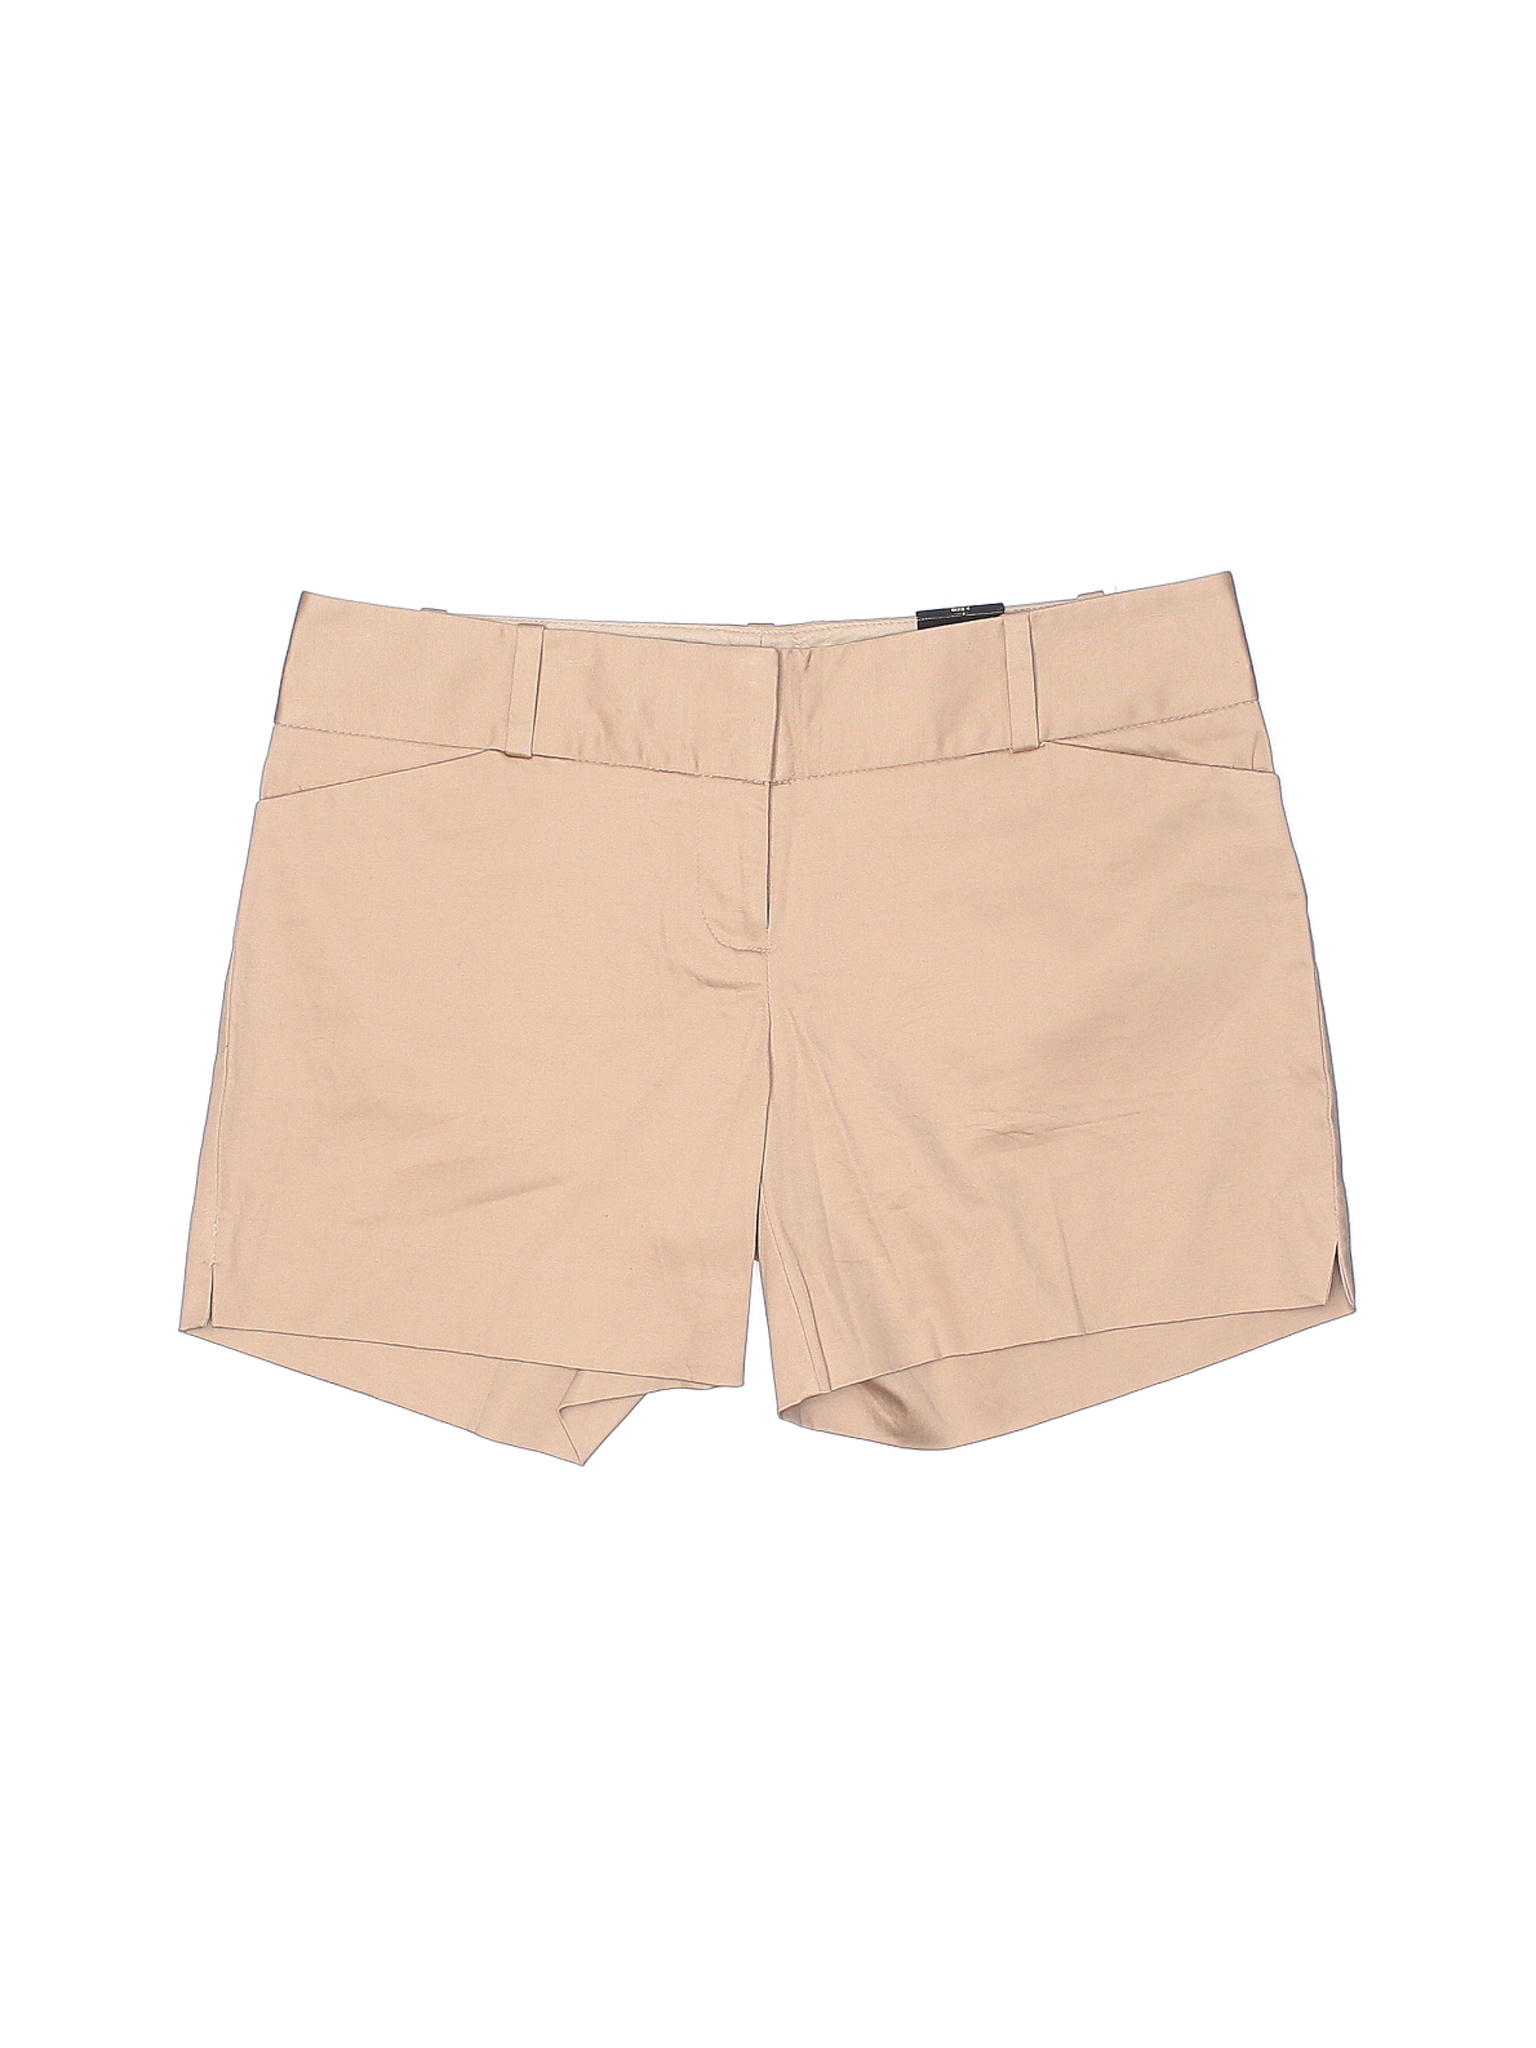 NWT The Limited Women Brown Khaki Shorts 4 | eBay